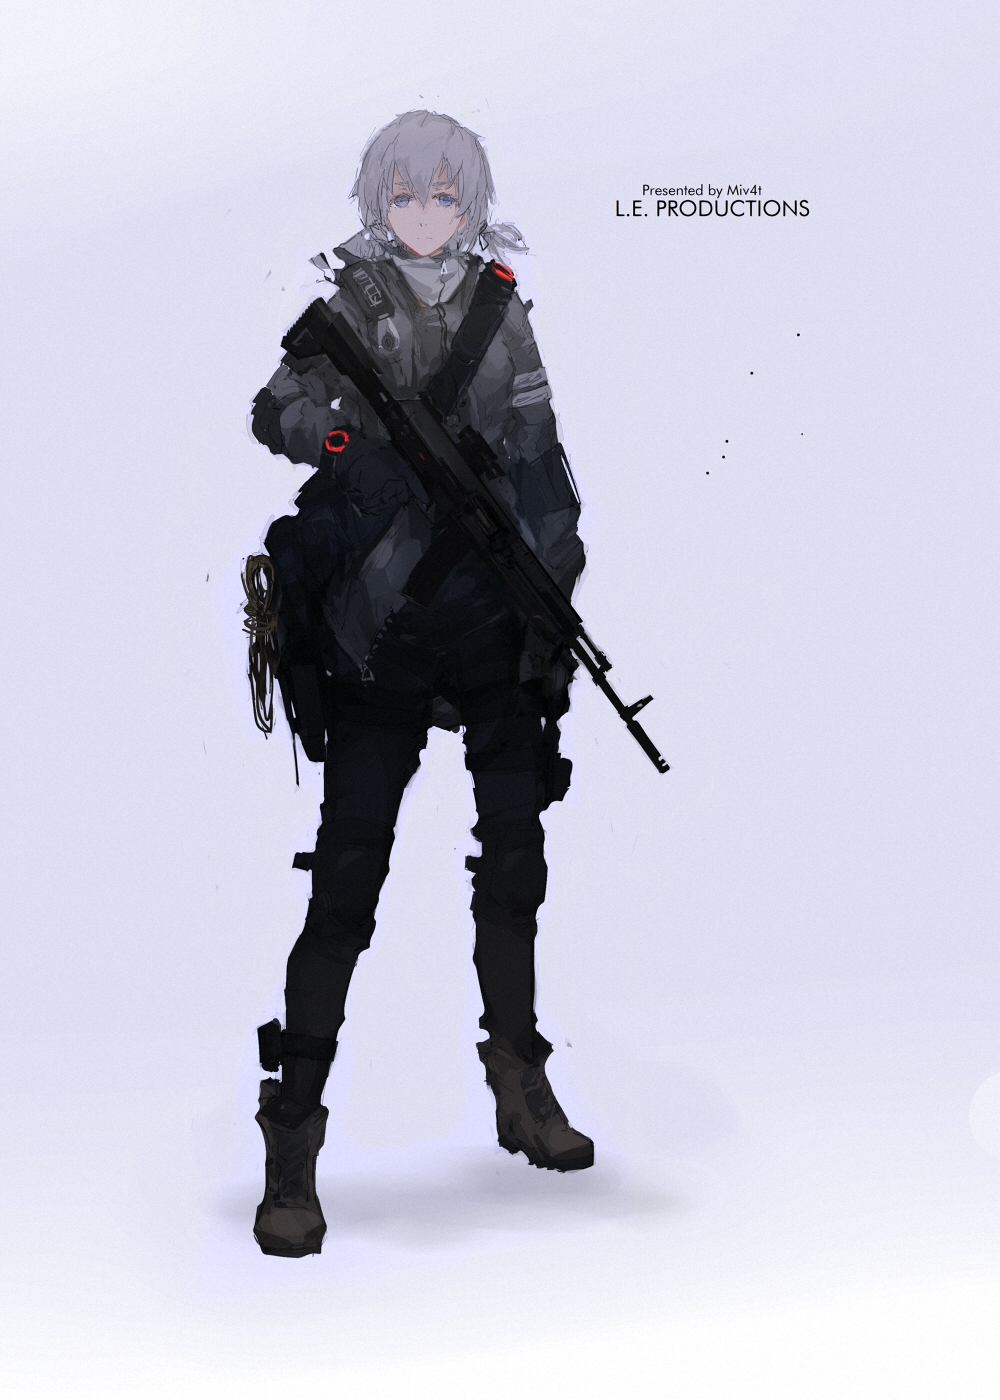 Anime 1000x1400 anime assault rifle Pixiv weapon white background simple background machine gun